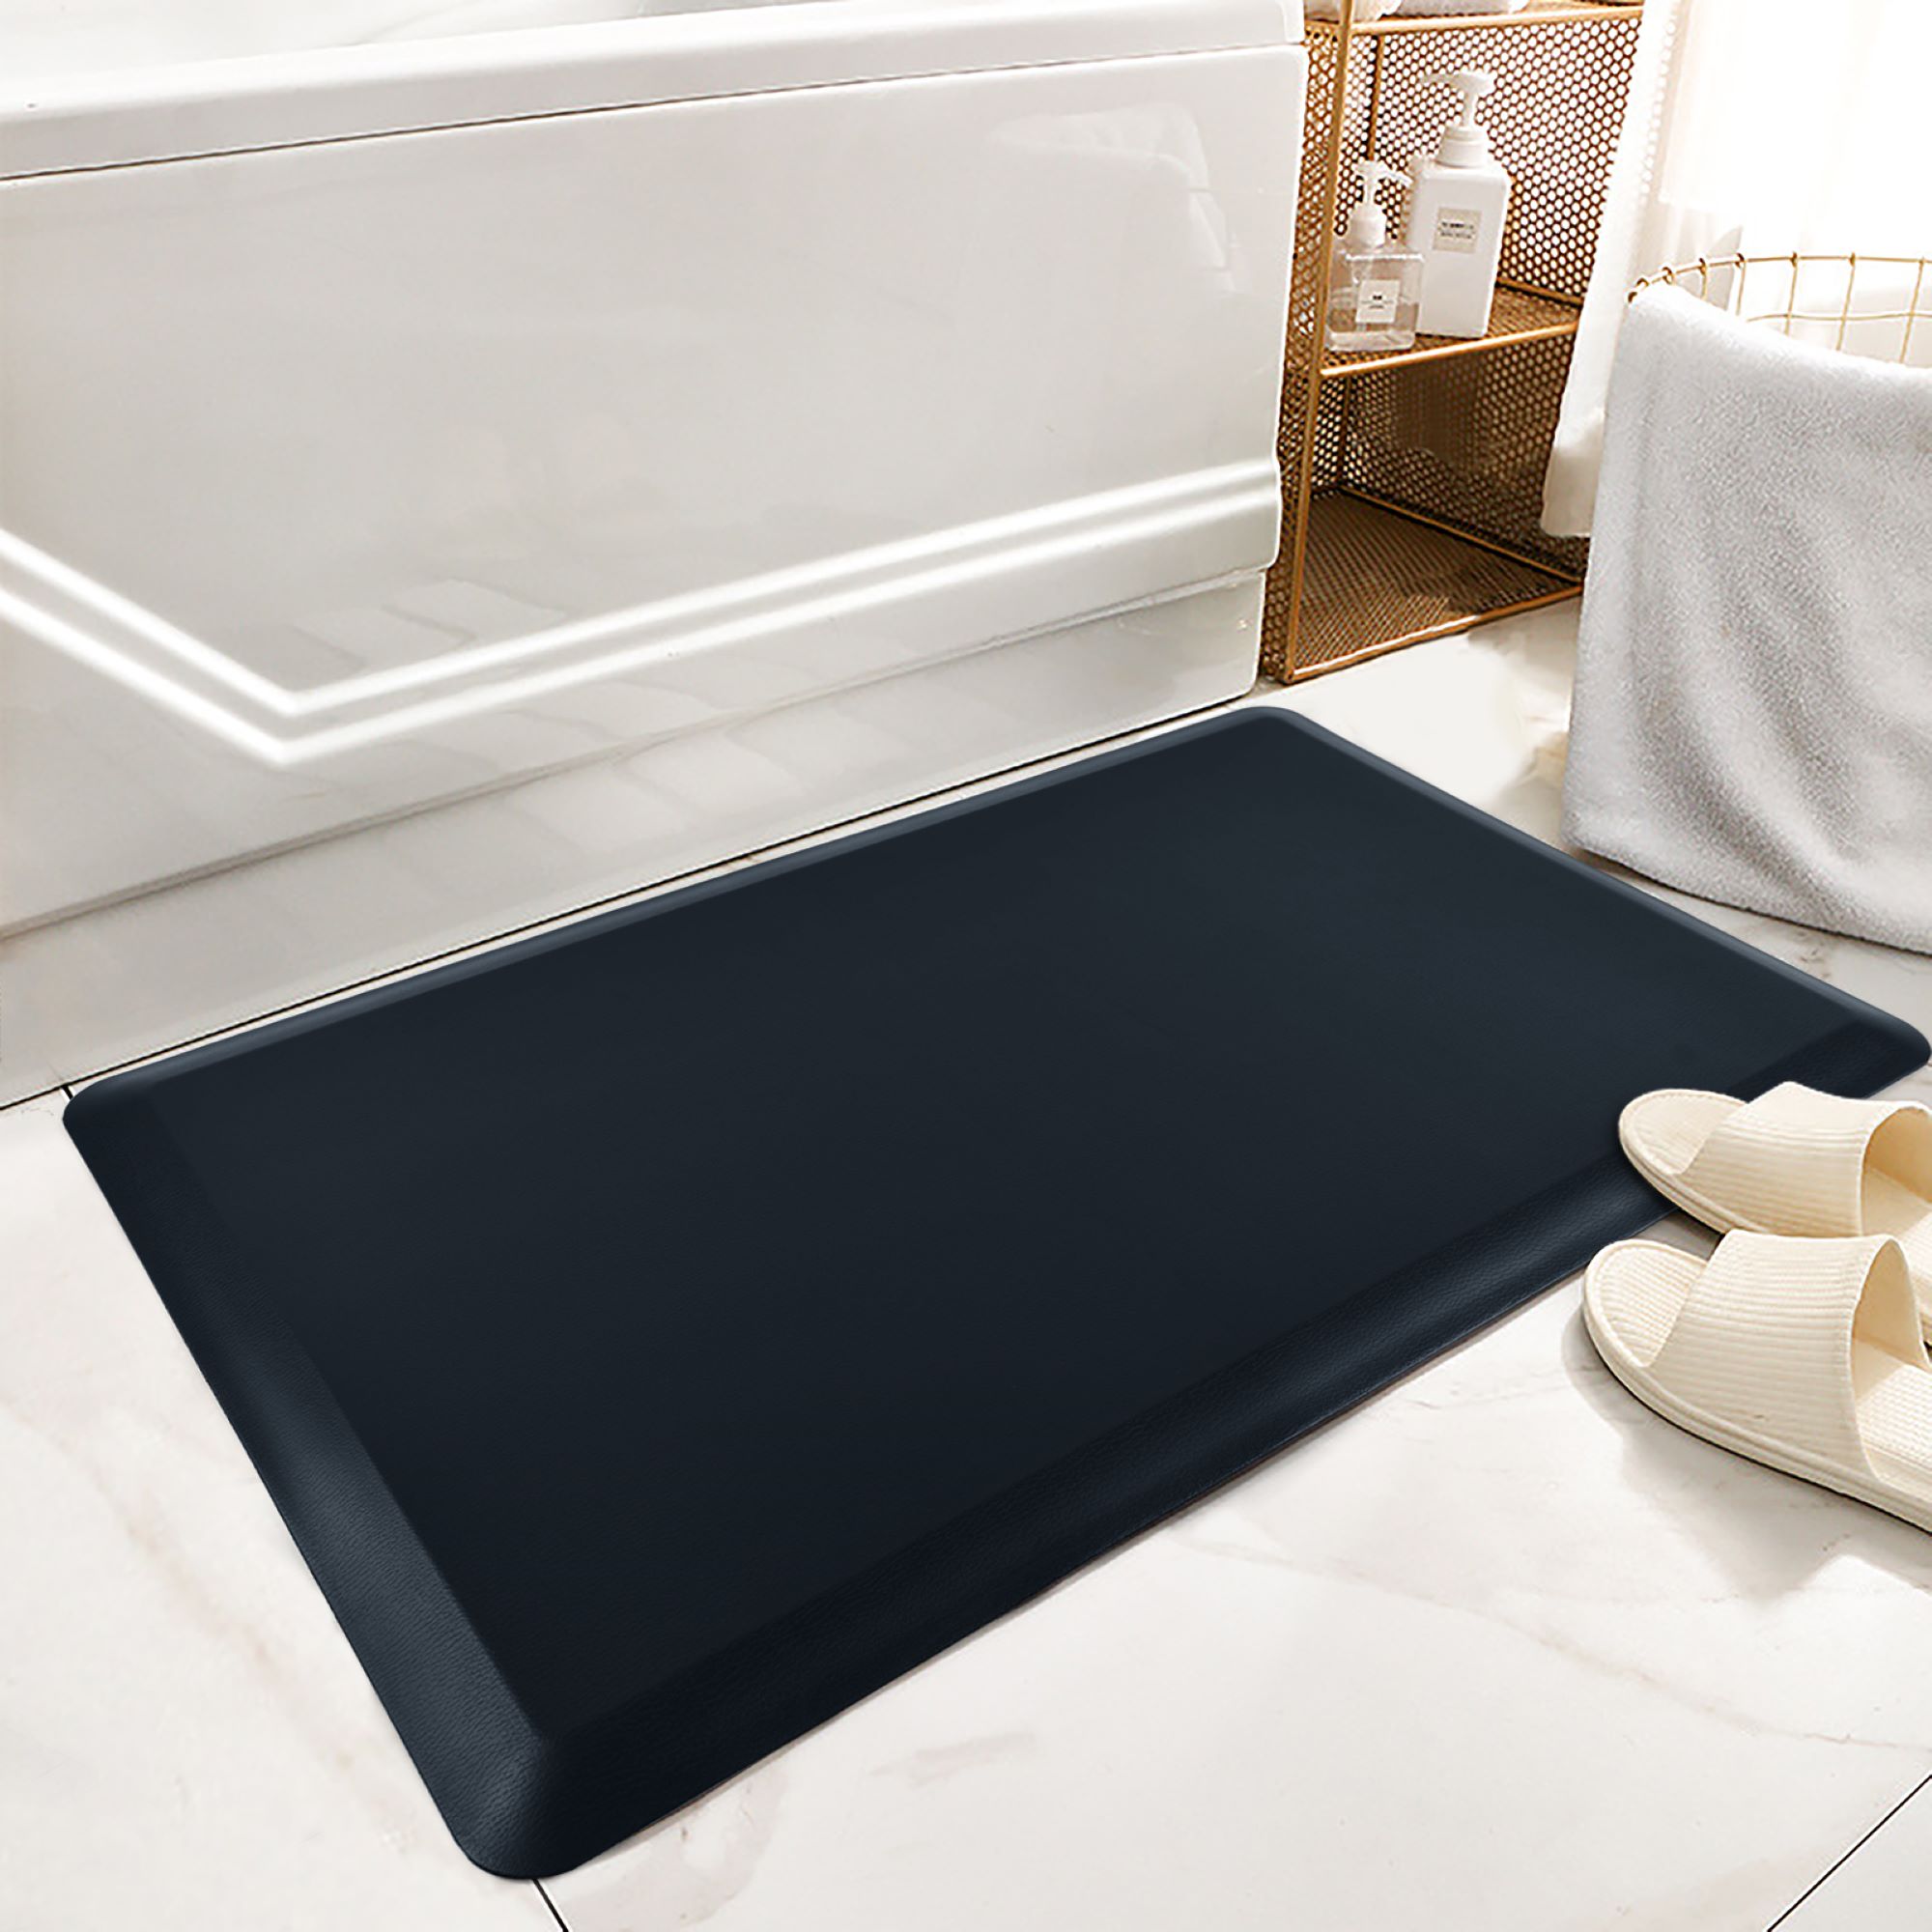 Jaidan Anti-Fatigue Mat Astoria Grand Color: Black